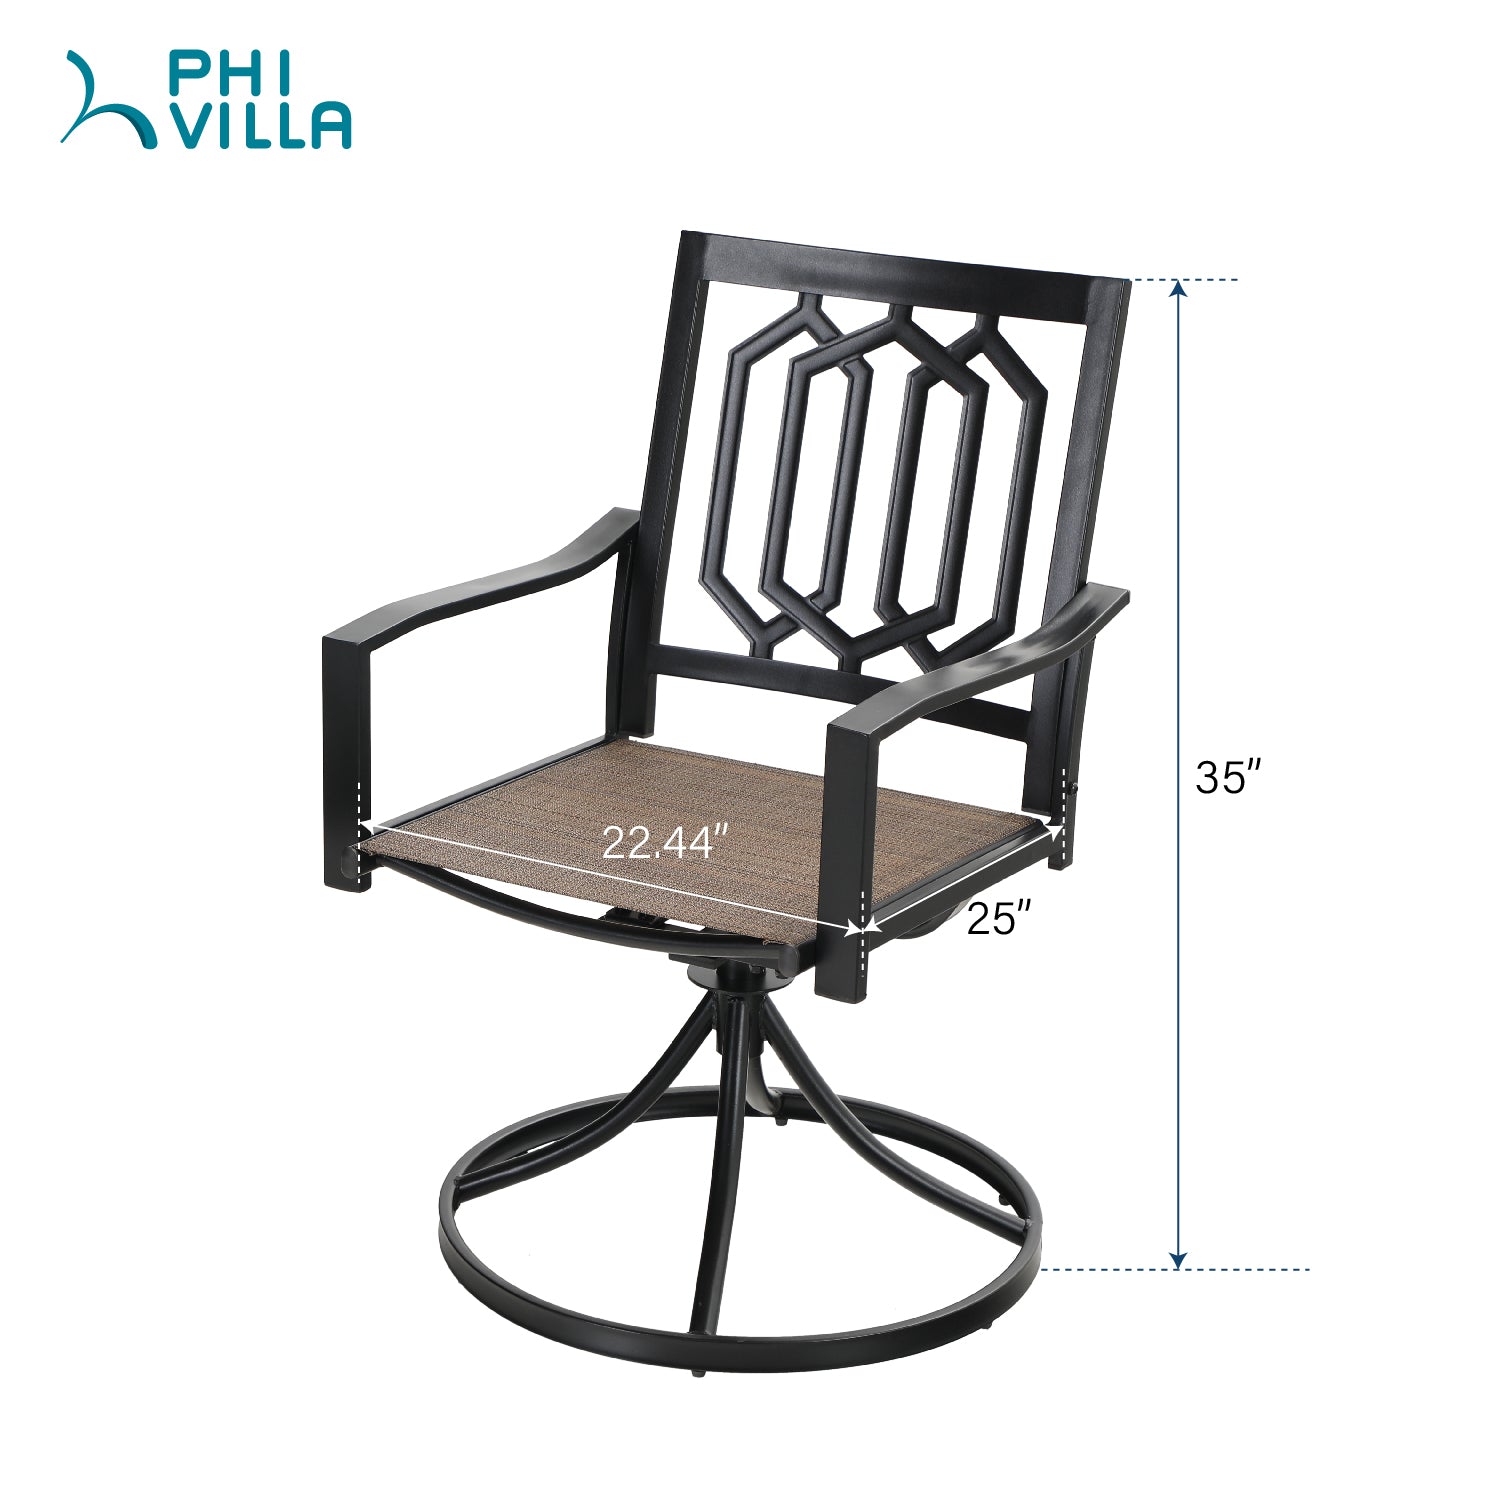 Sophia & William Steel Table and 2 Textilene Chairs 3-Piece Metal Outdoor Patio Bistro Set